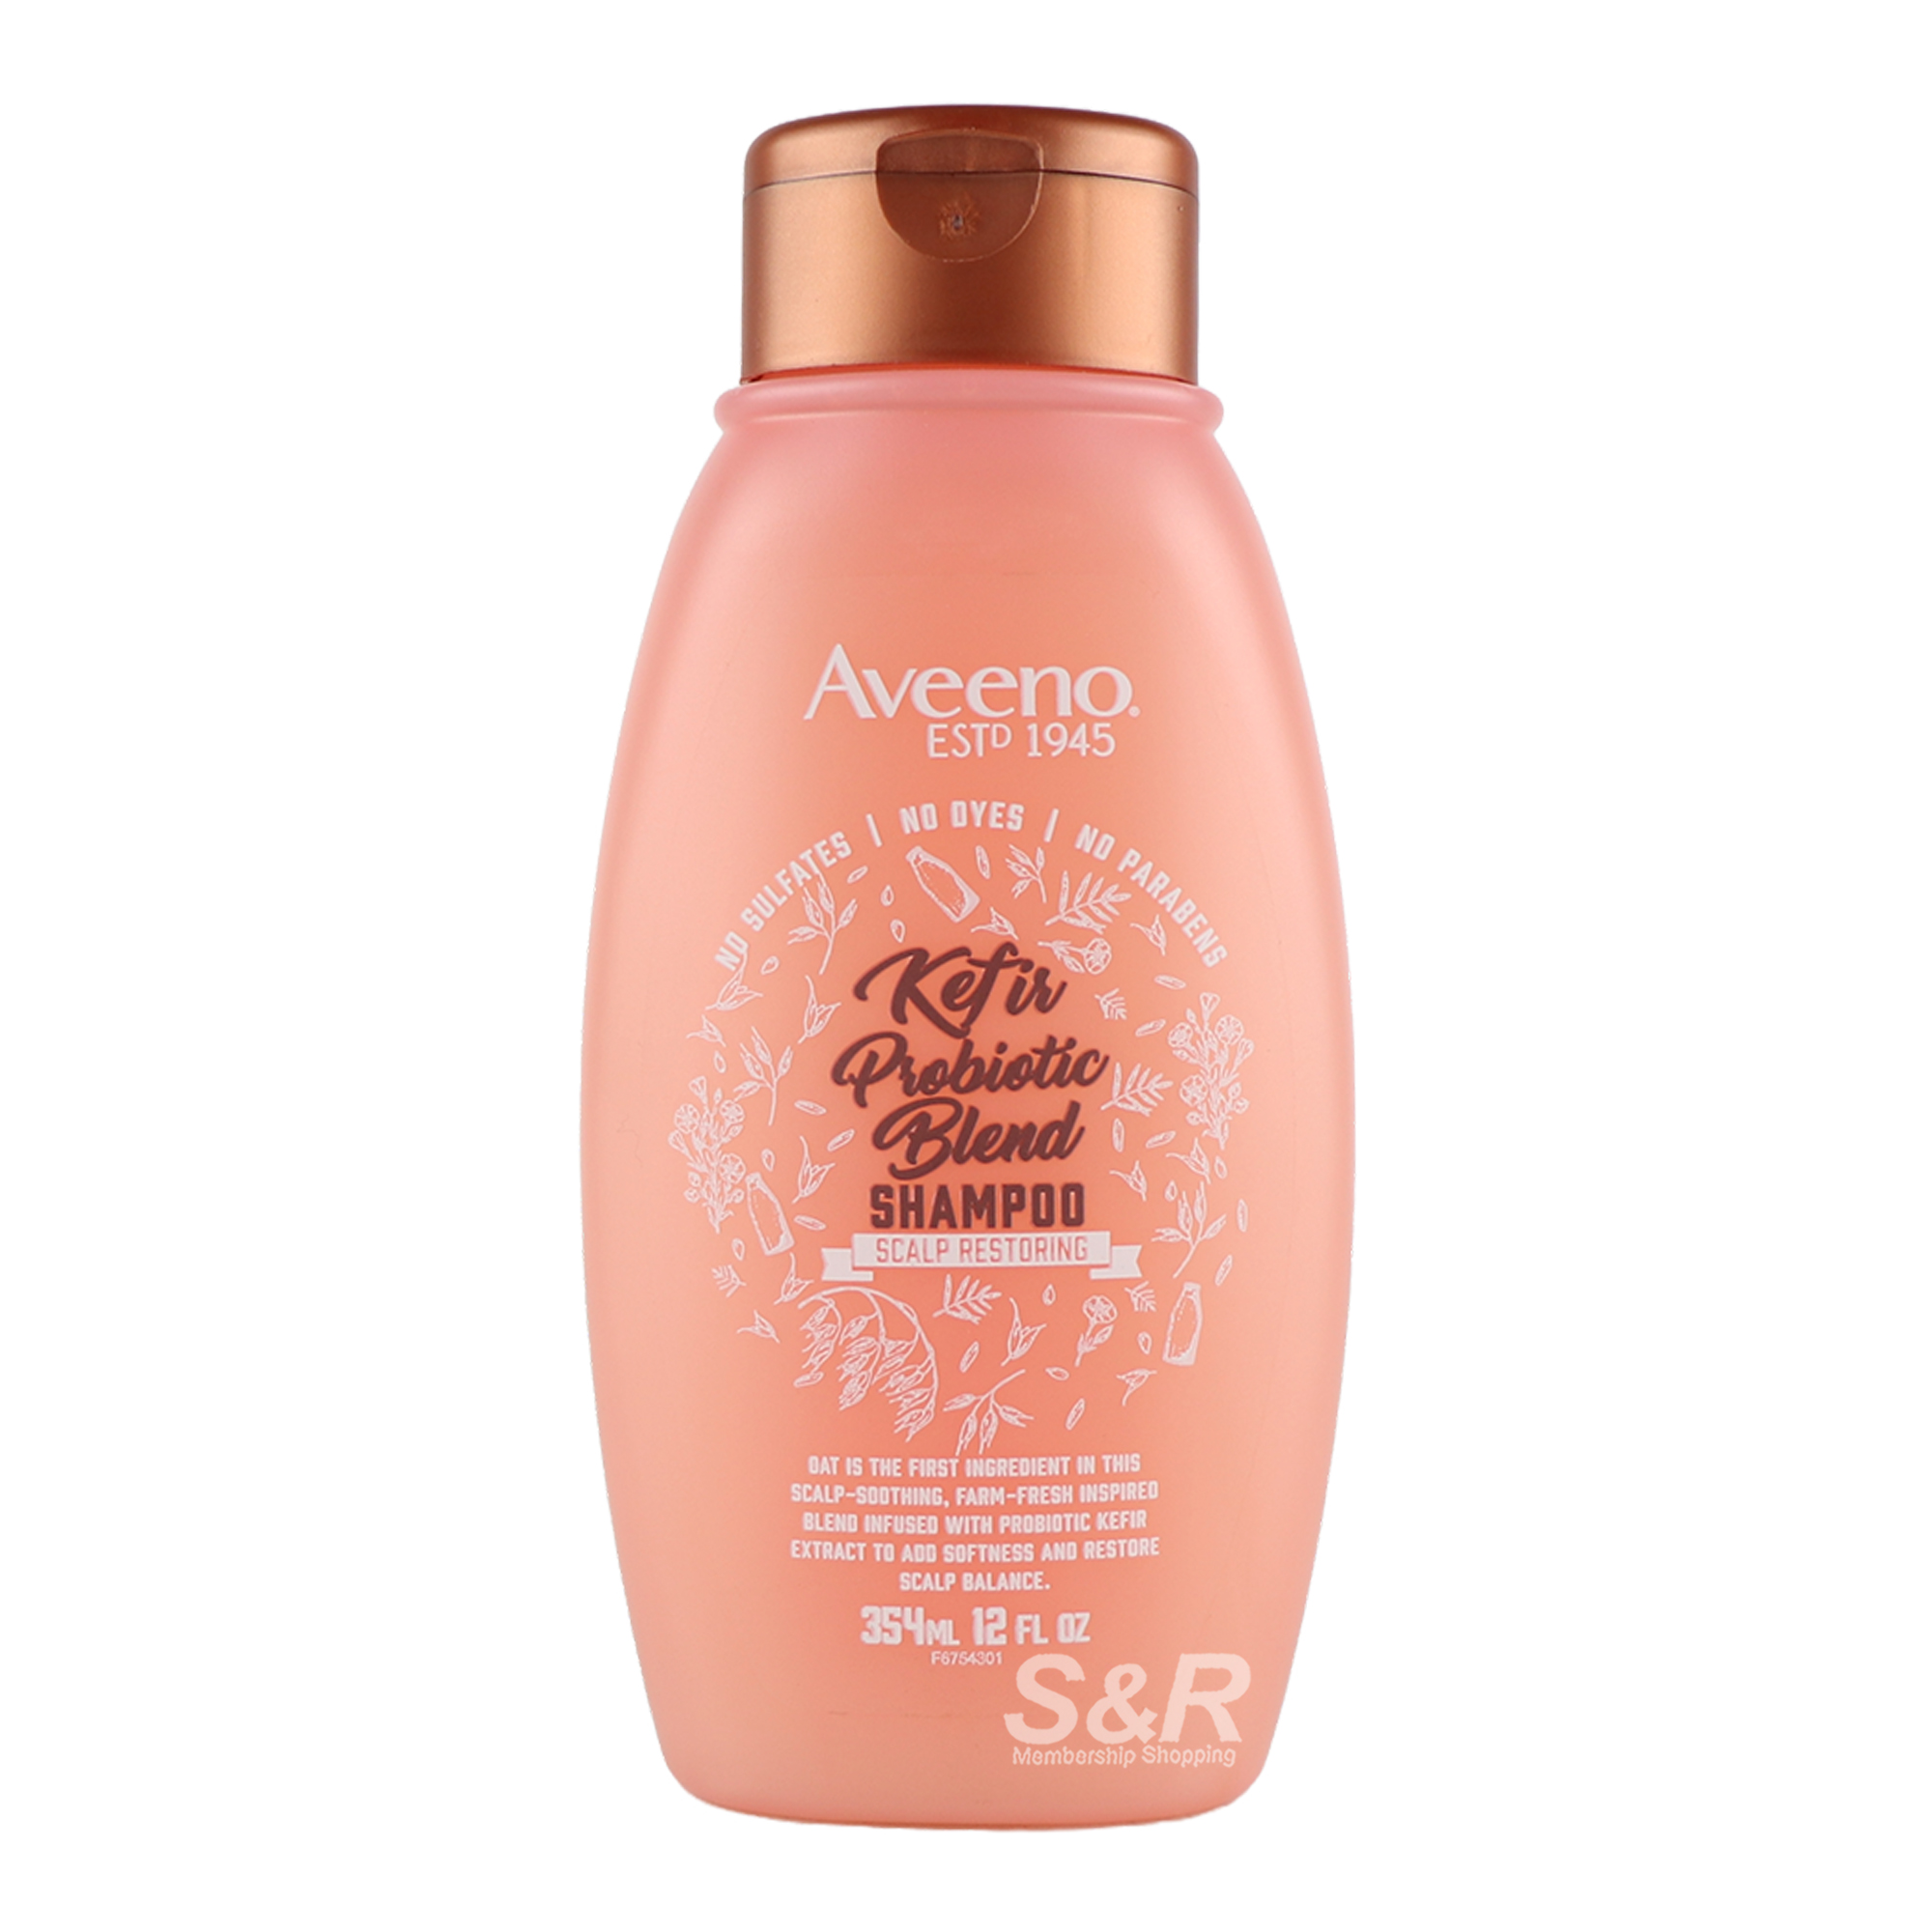 Aveeno Kefir Probiotic Blend Shampoo 354mL